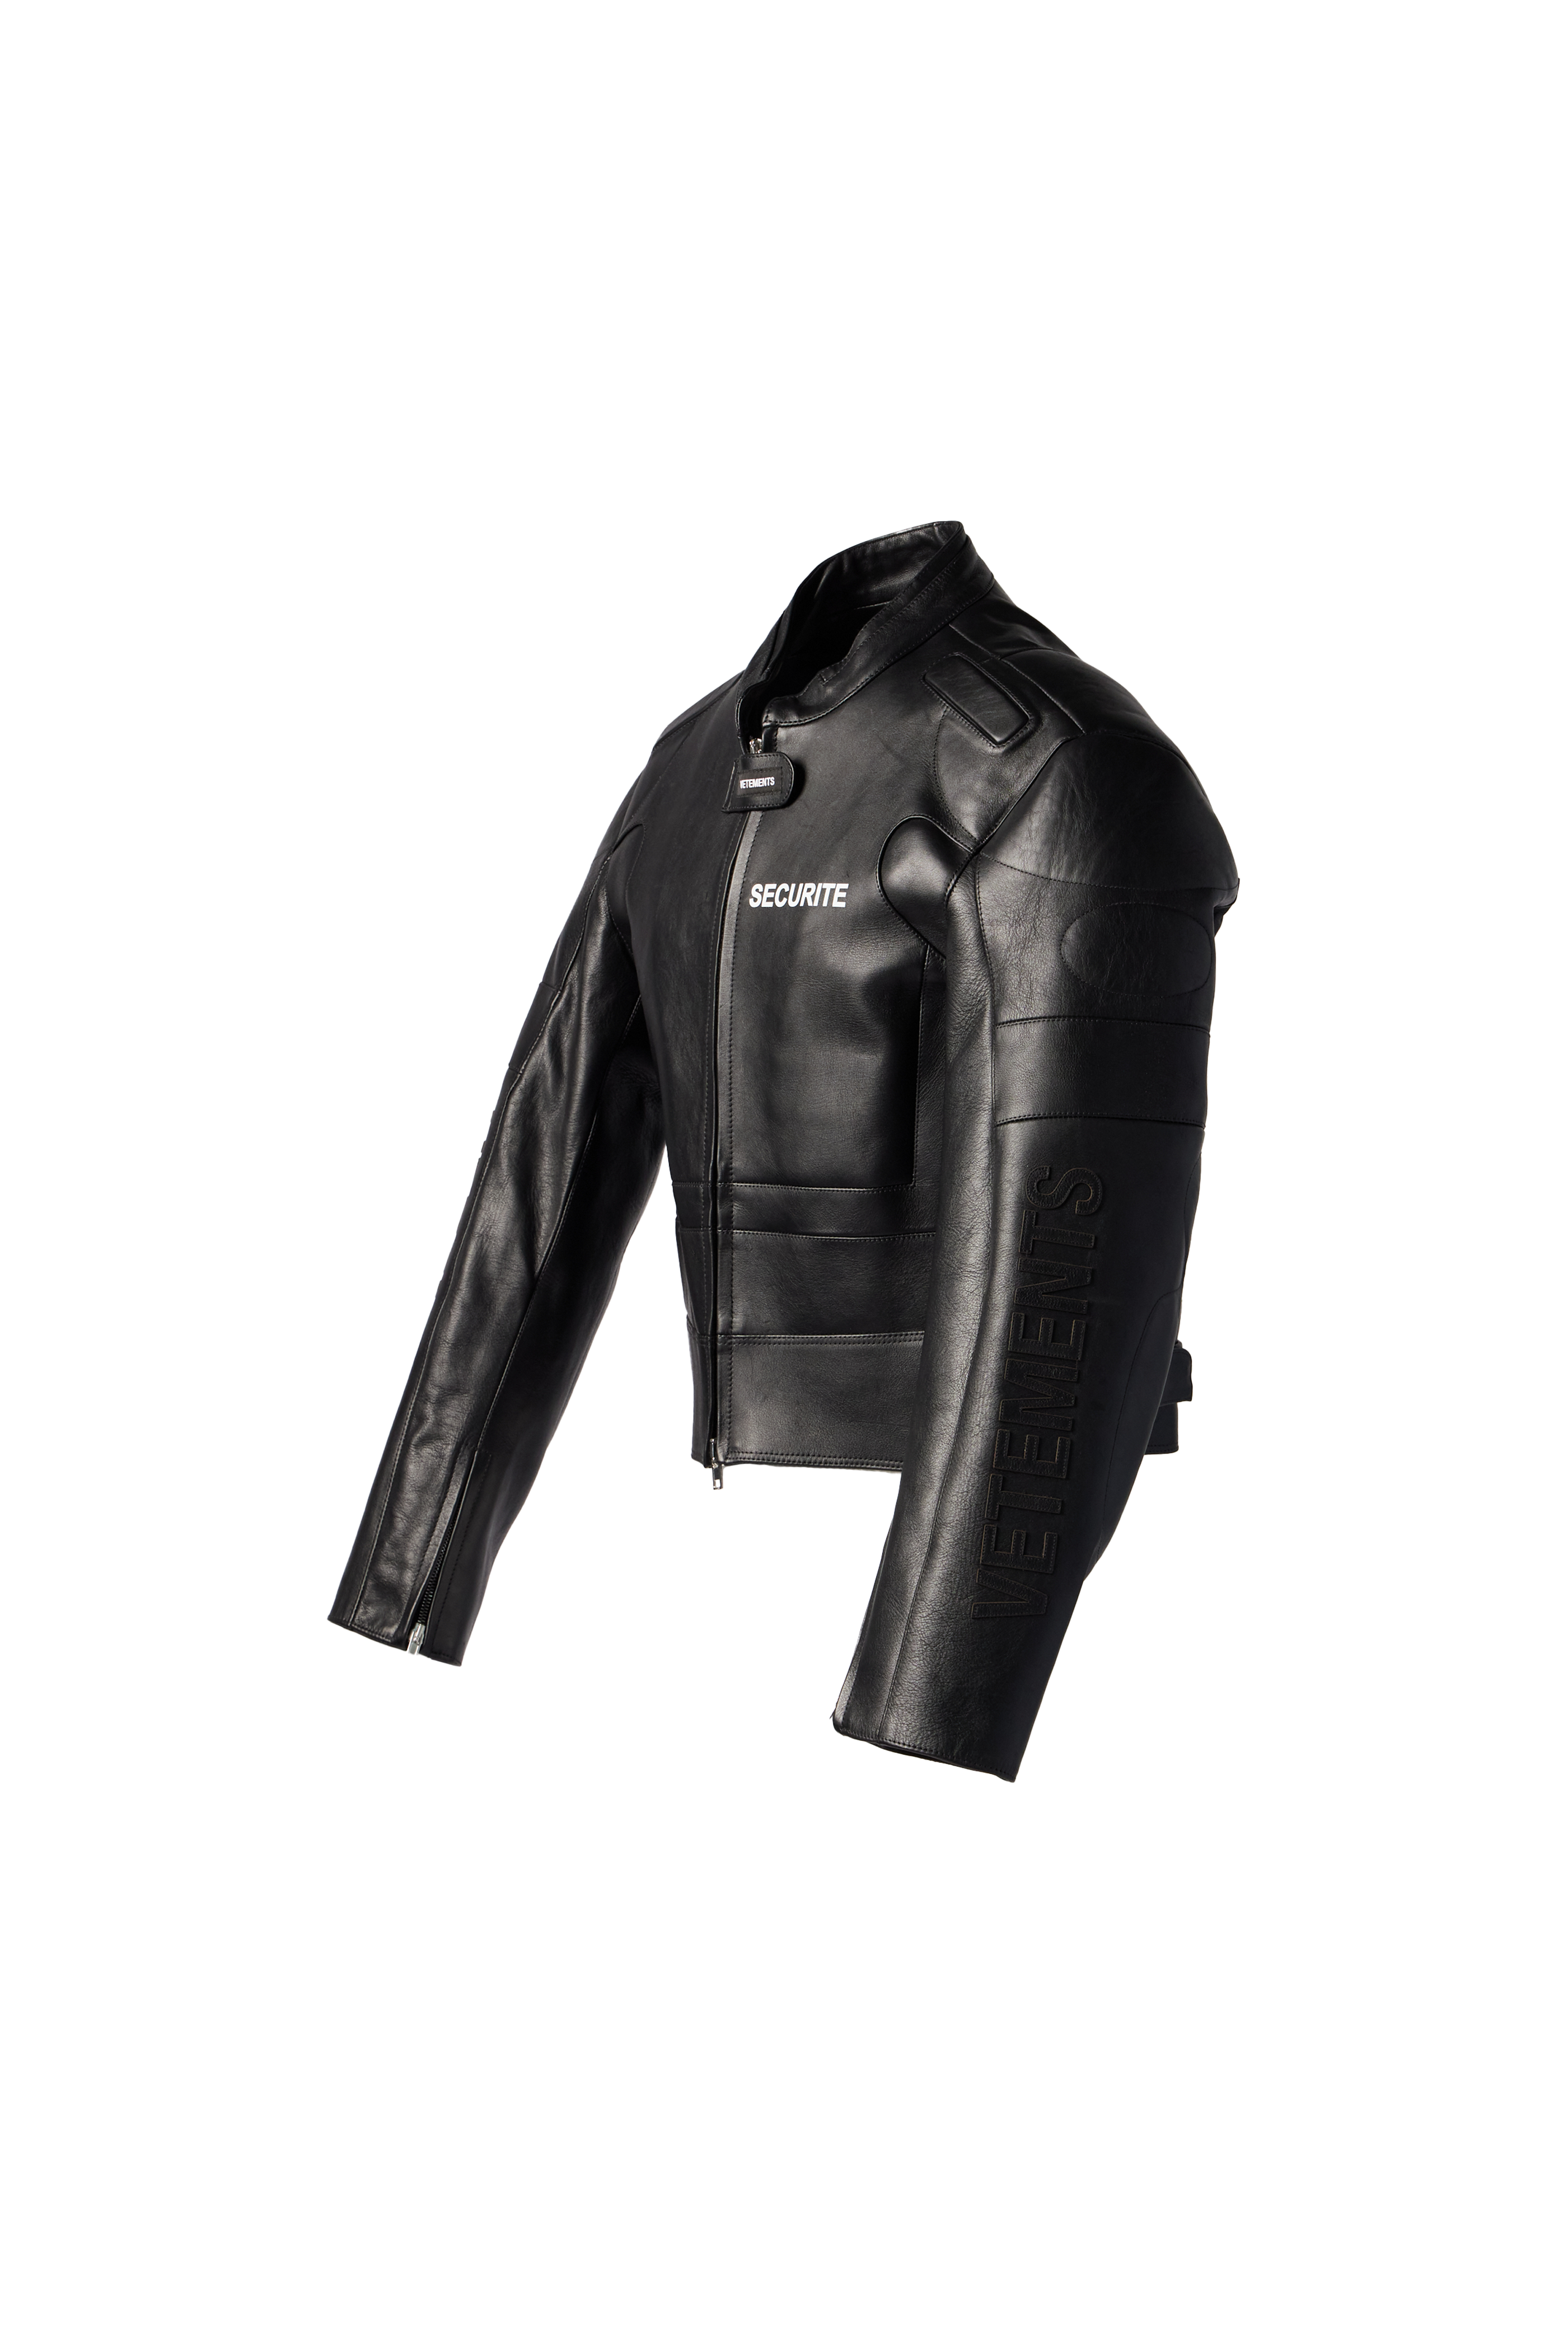 VETEMENTS - Securite Motorcross Jacket product image